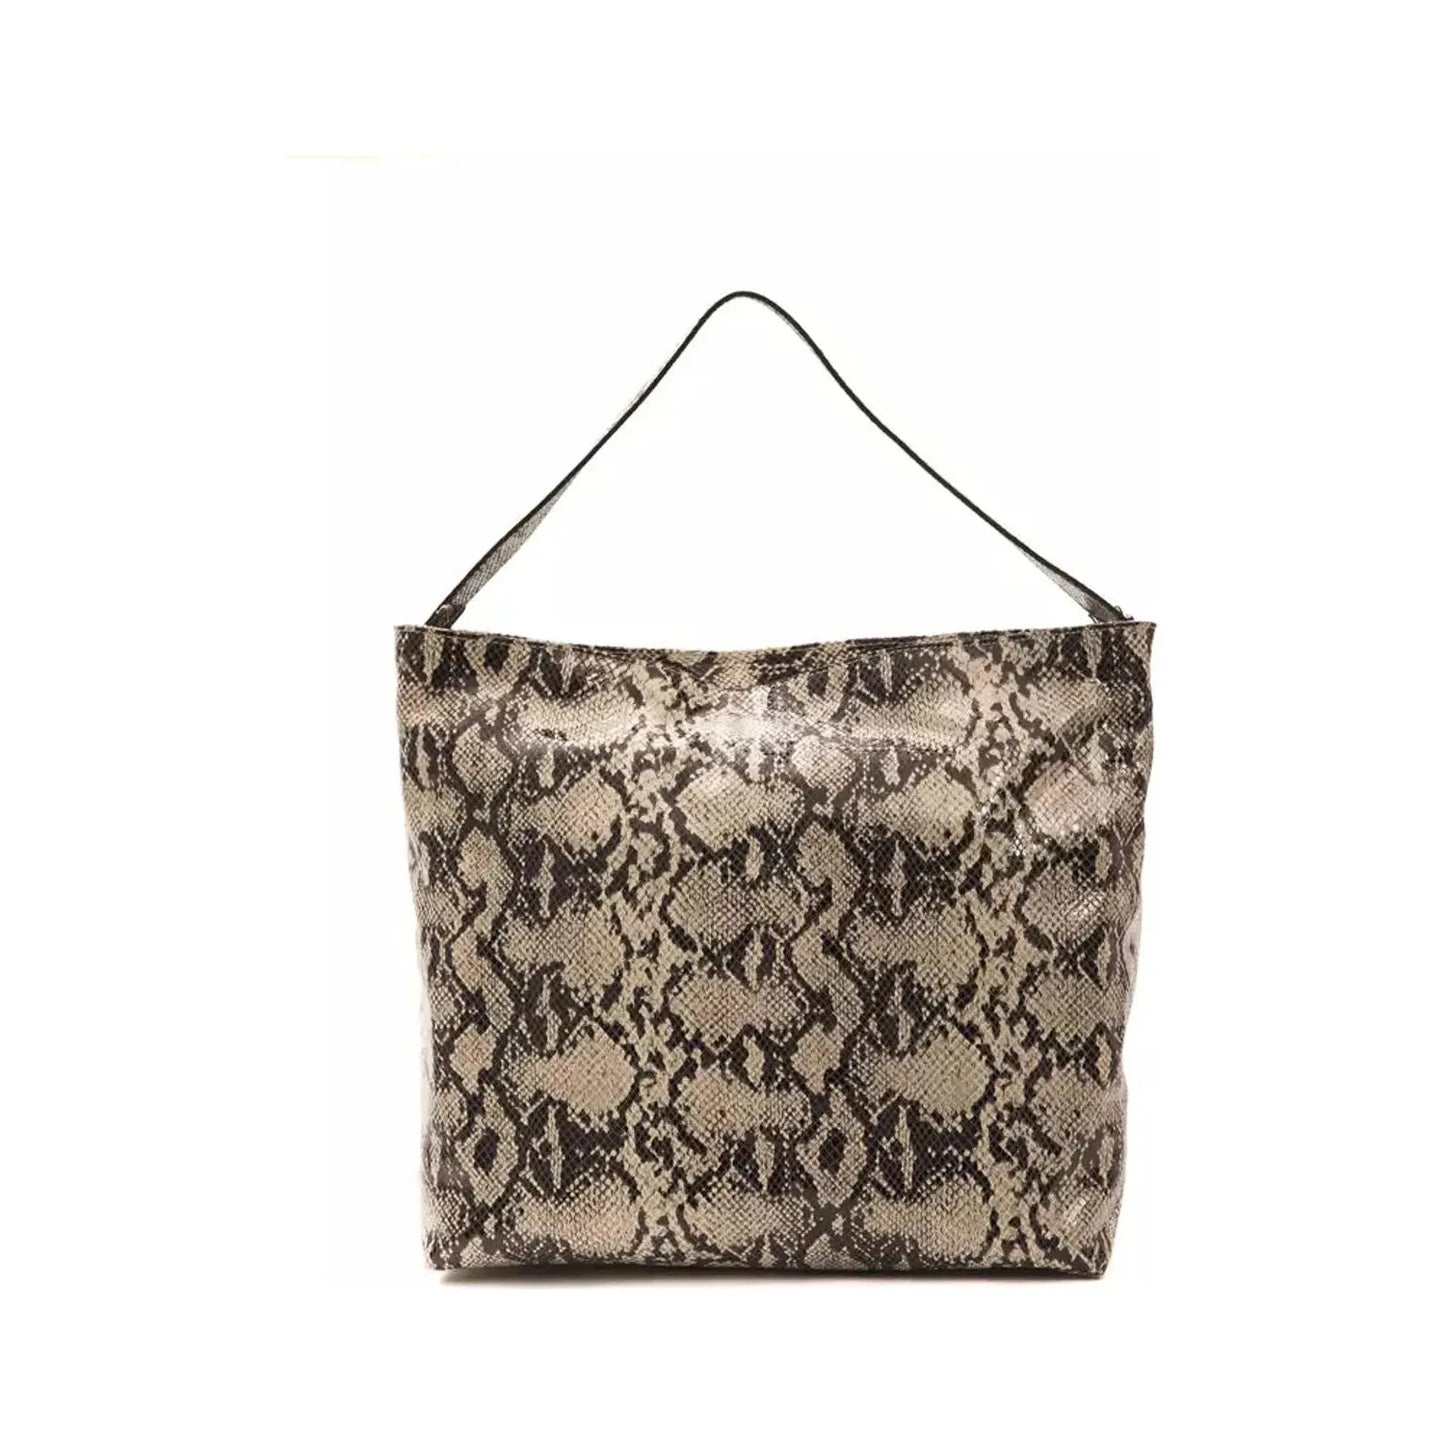 Pompei Donatella Chic Python Print Leather Shoulder Bag gray-leather-shoulder-bag-5